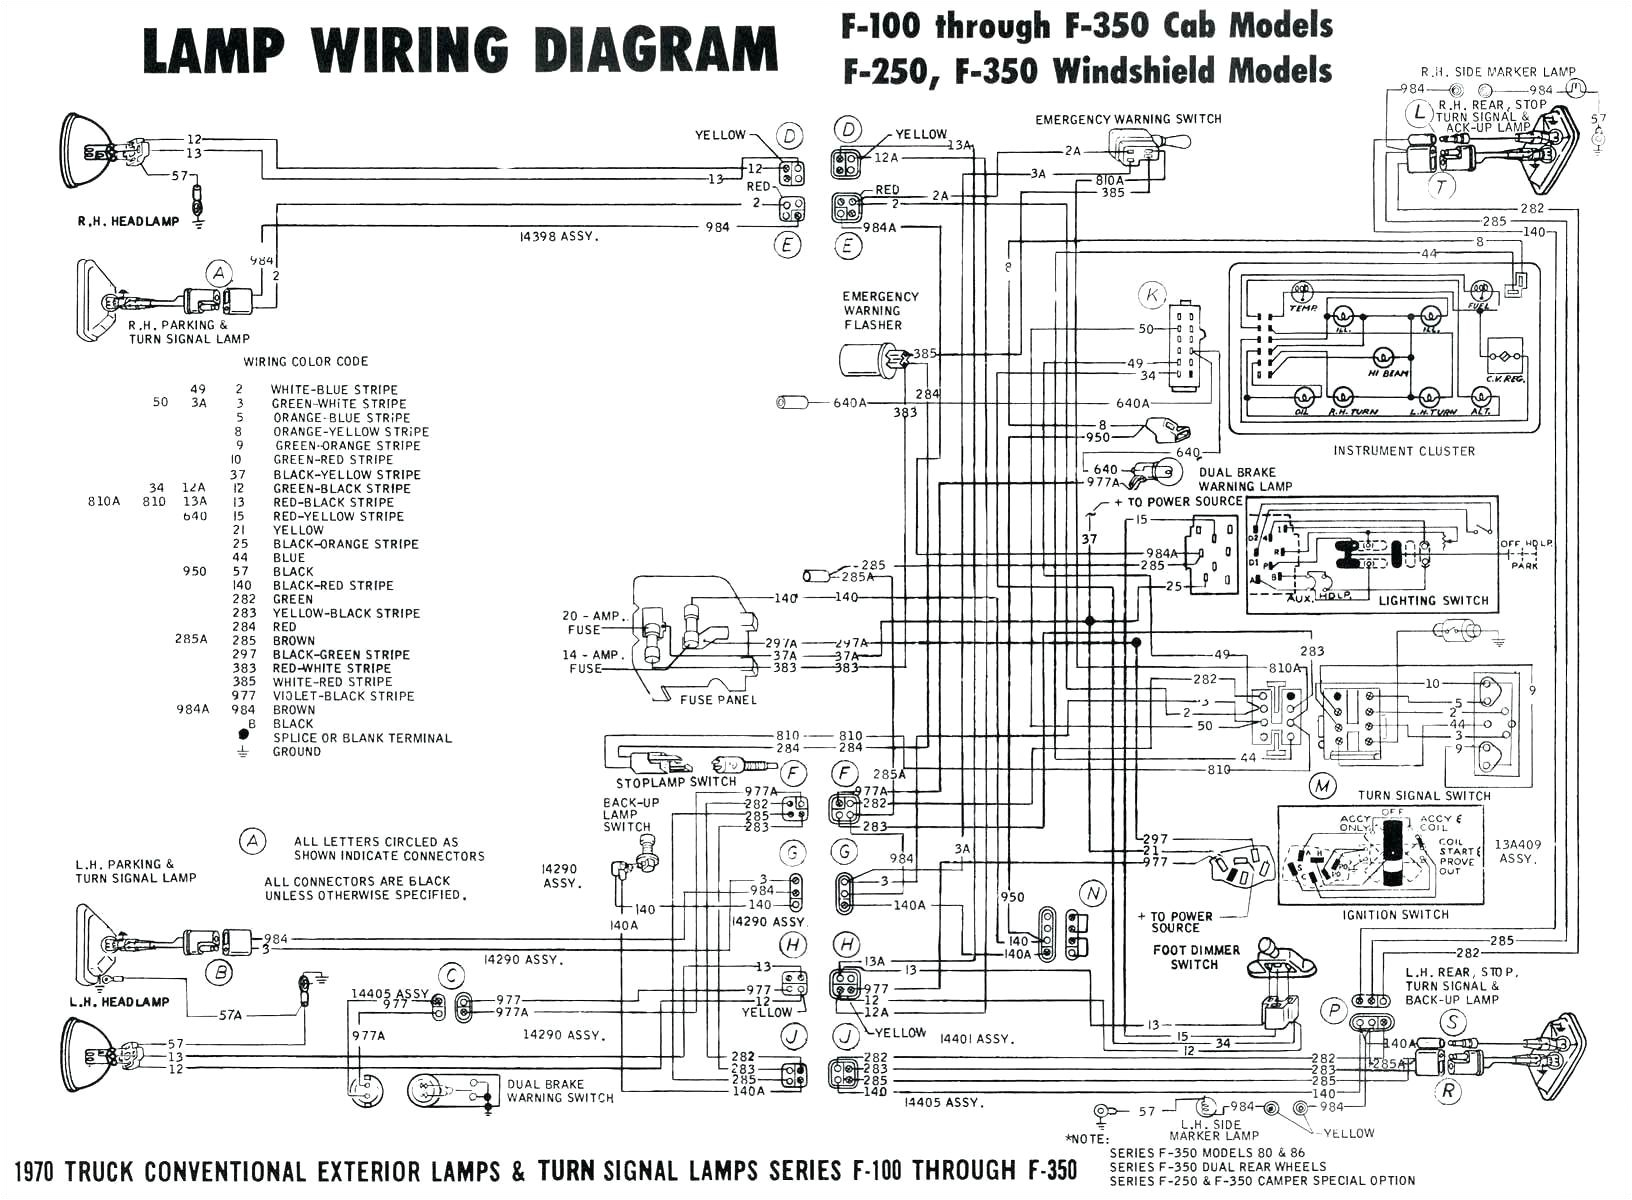 3 5mm jack wiring diagrams schematics for 5mm diagram